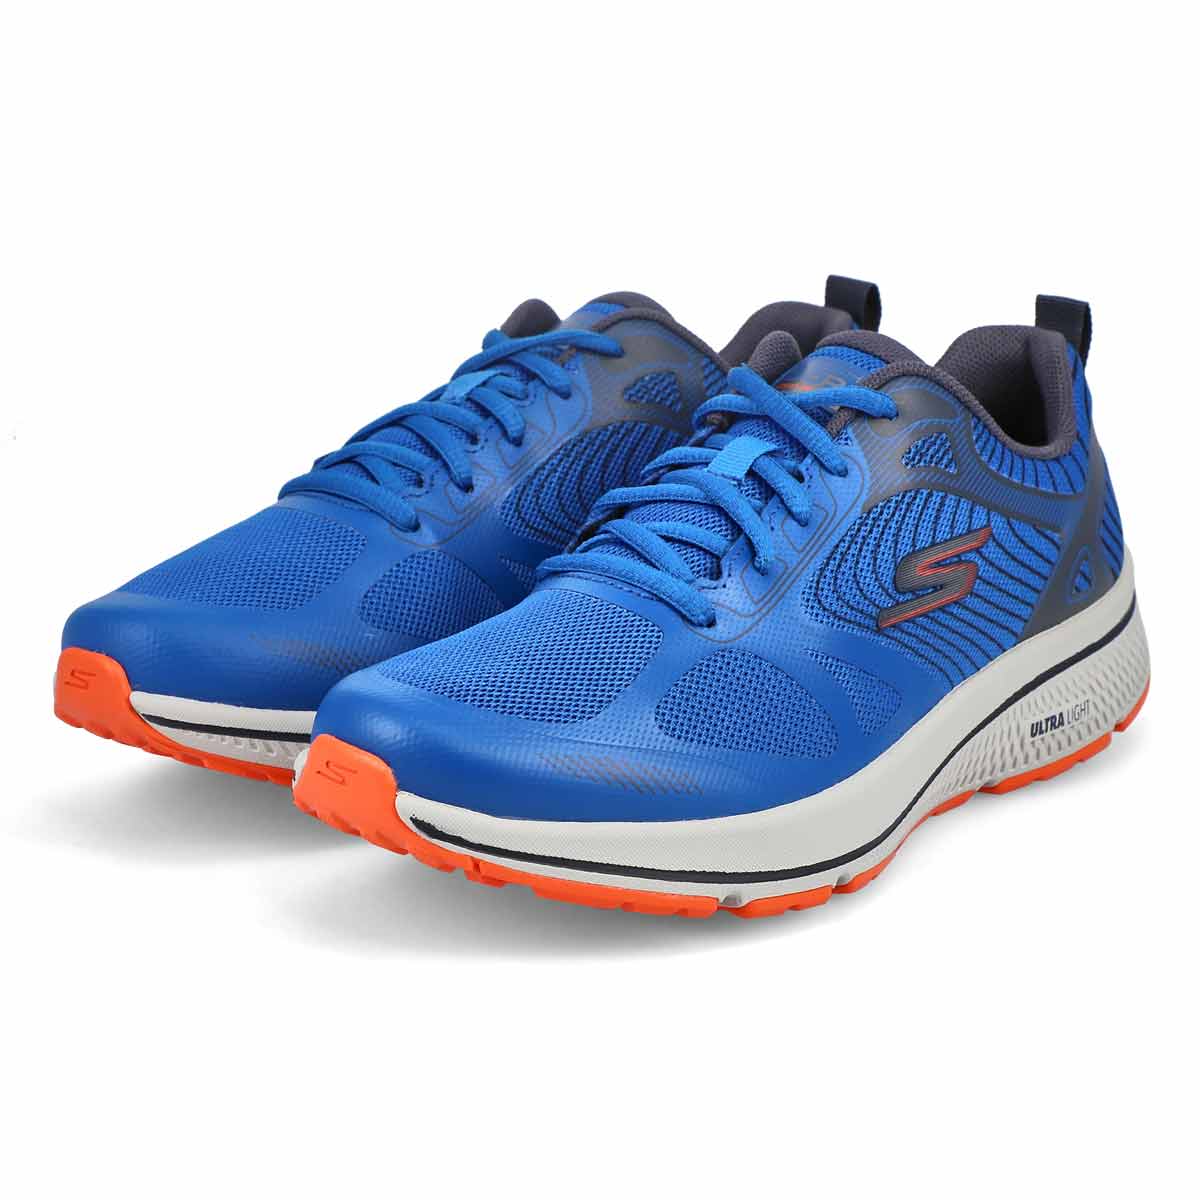 Chaussure de course GO Run, bleu/orange, homme